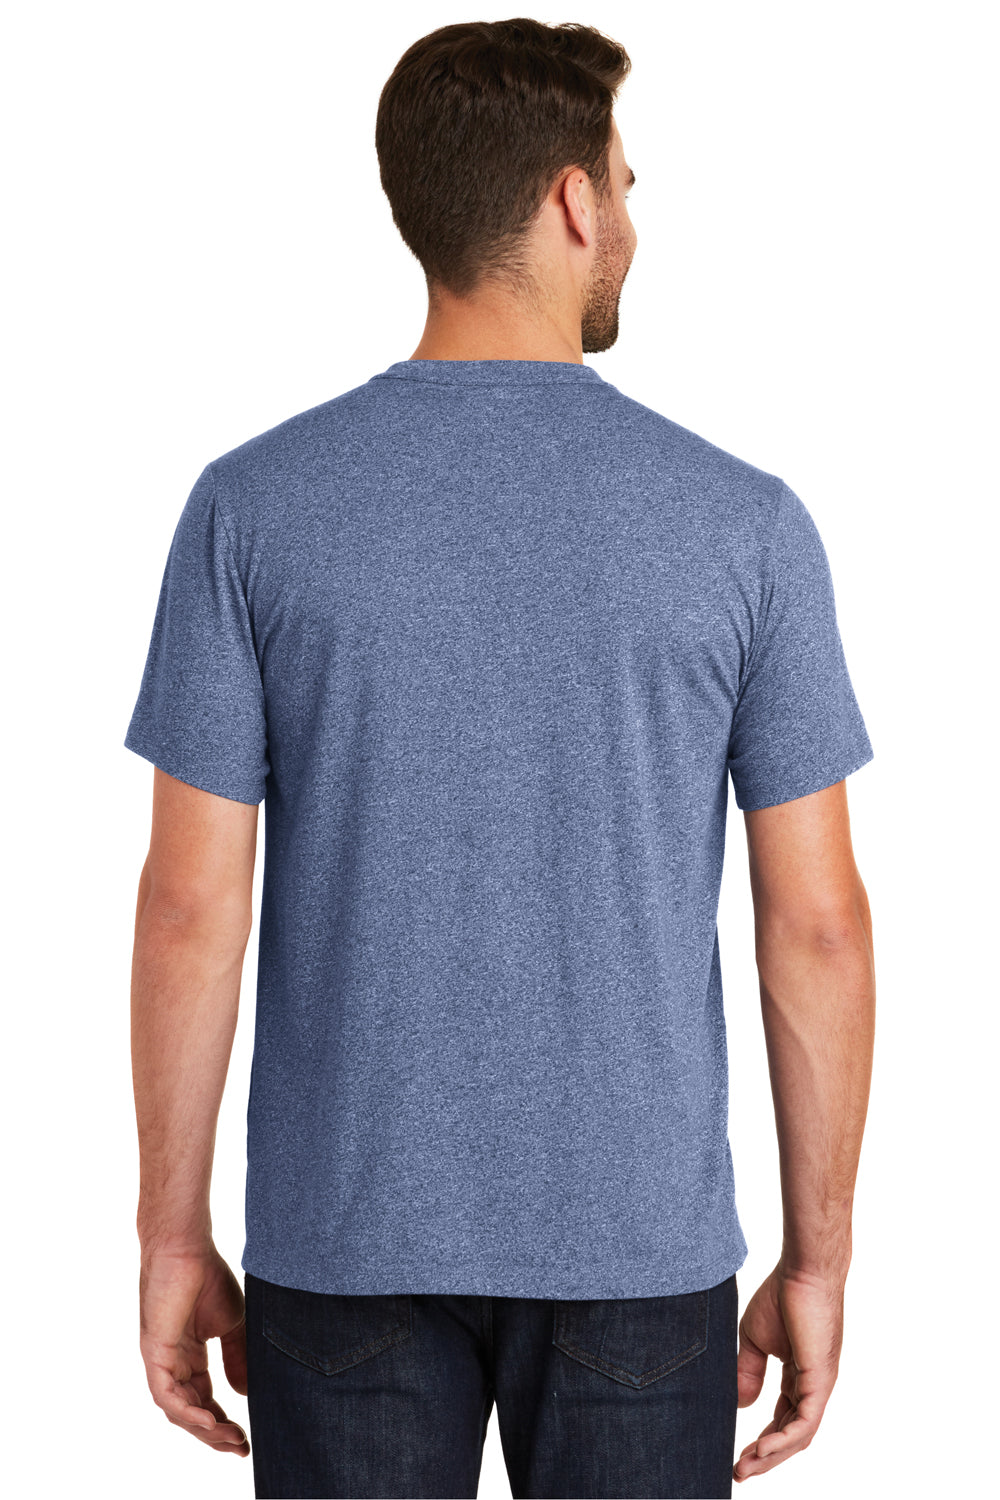 New Era NEA100 Mens Heritage Short Sleeve Crewneck T-Shirt Dark Royal Blue Twist Back